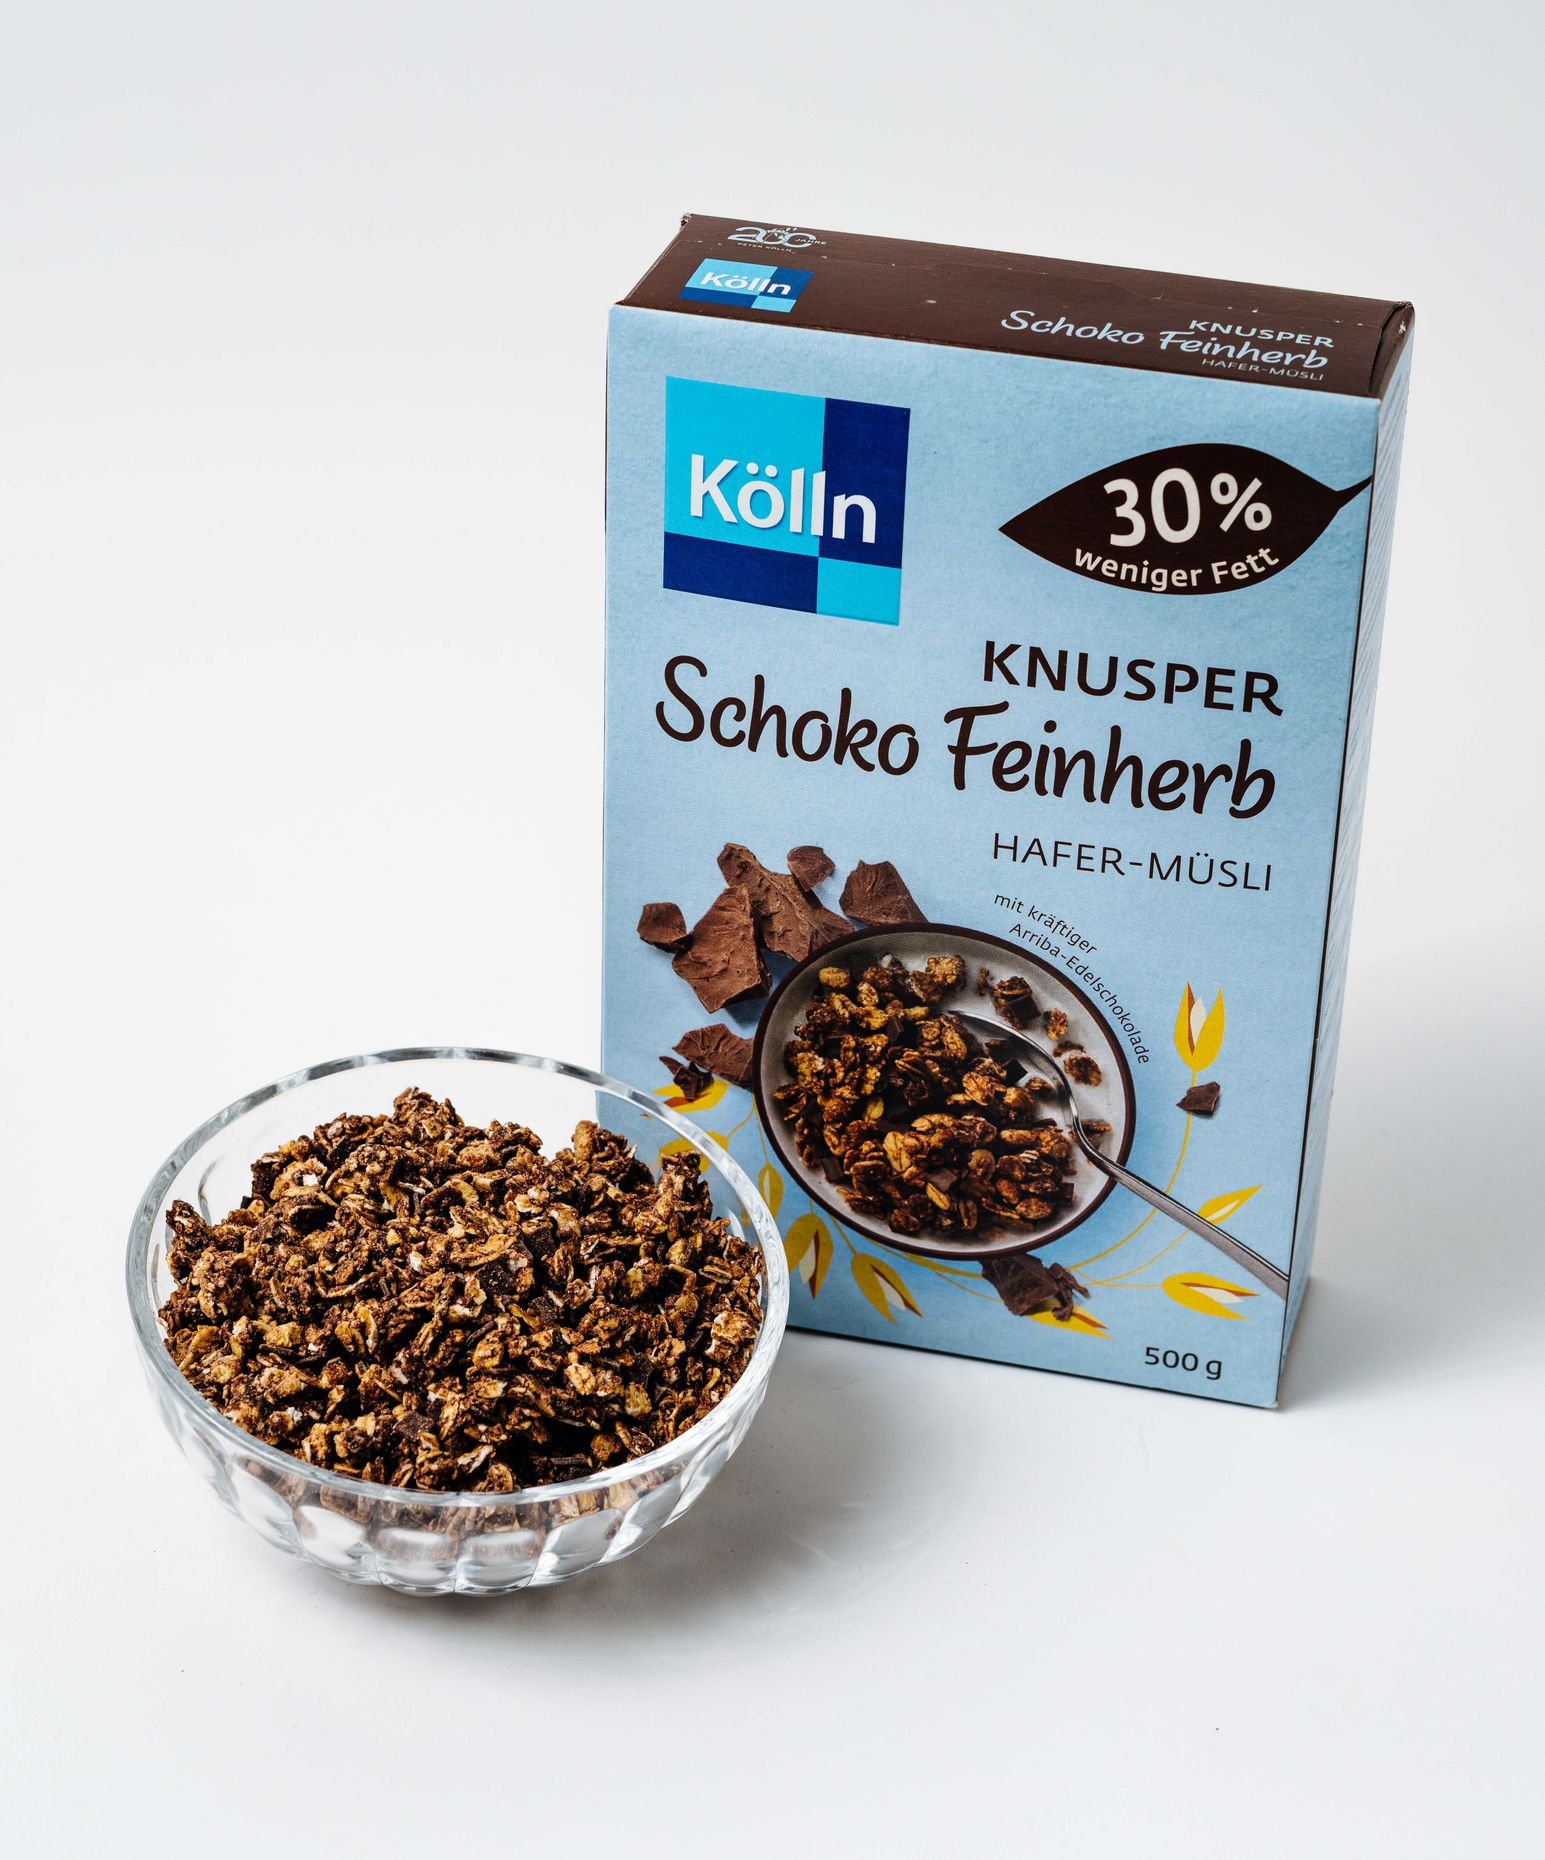 Kölln Muesli with Chocolate